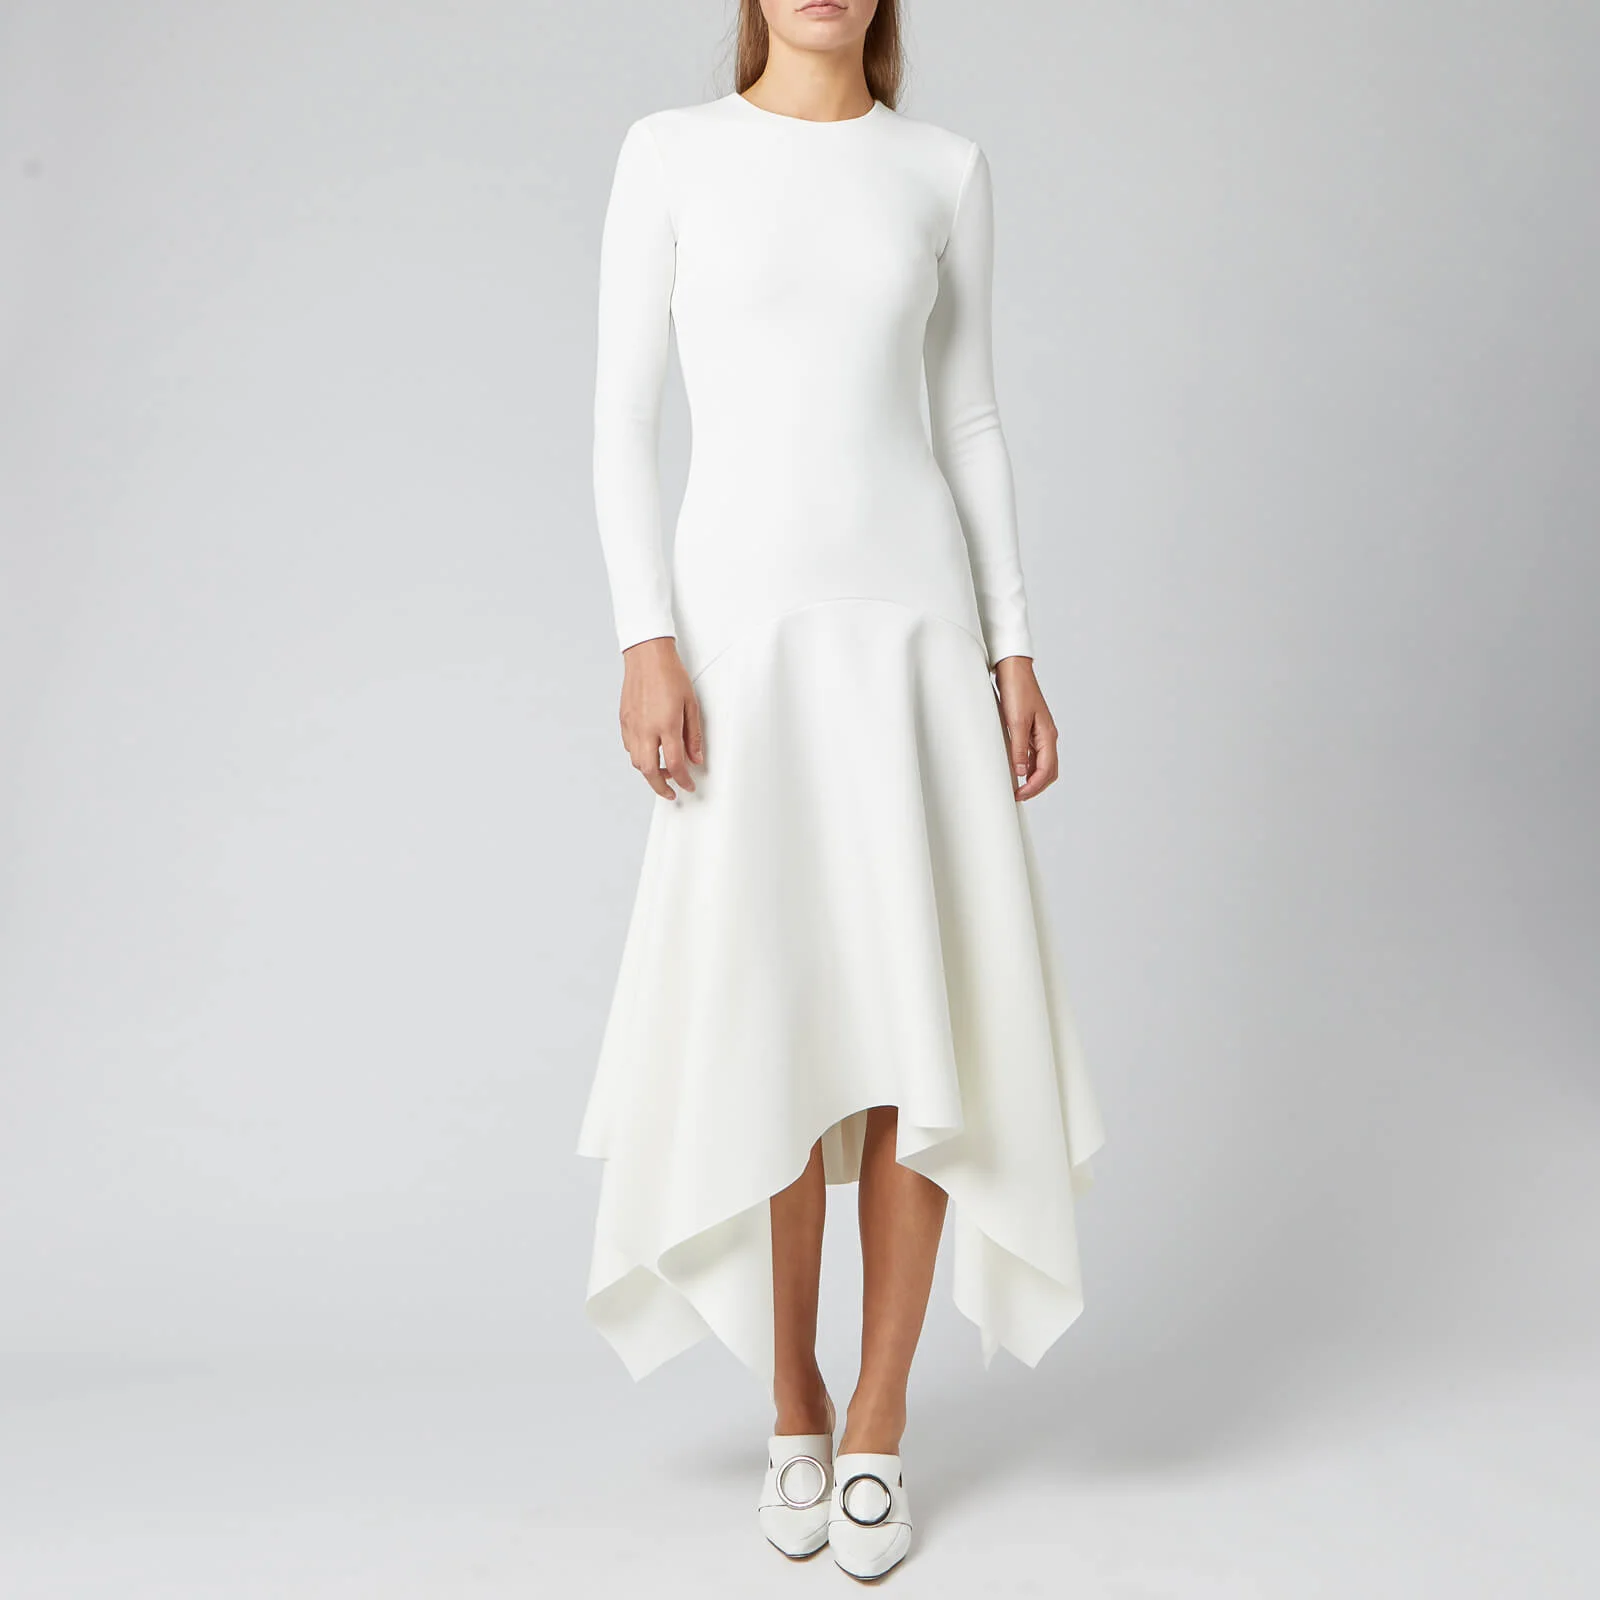 Solace London Women's Chance Midaxi Dress - Cream Image 1